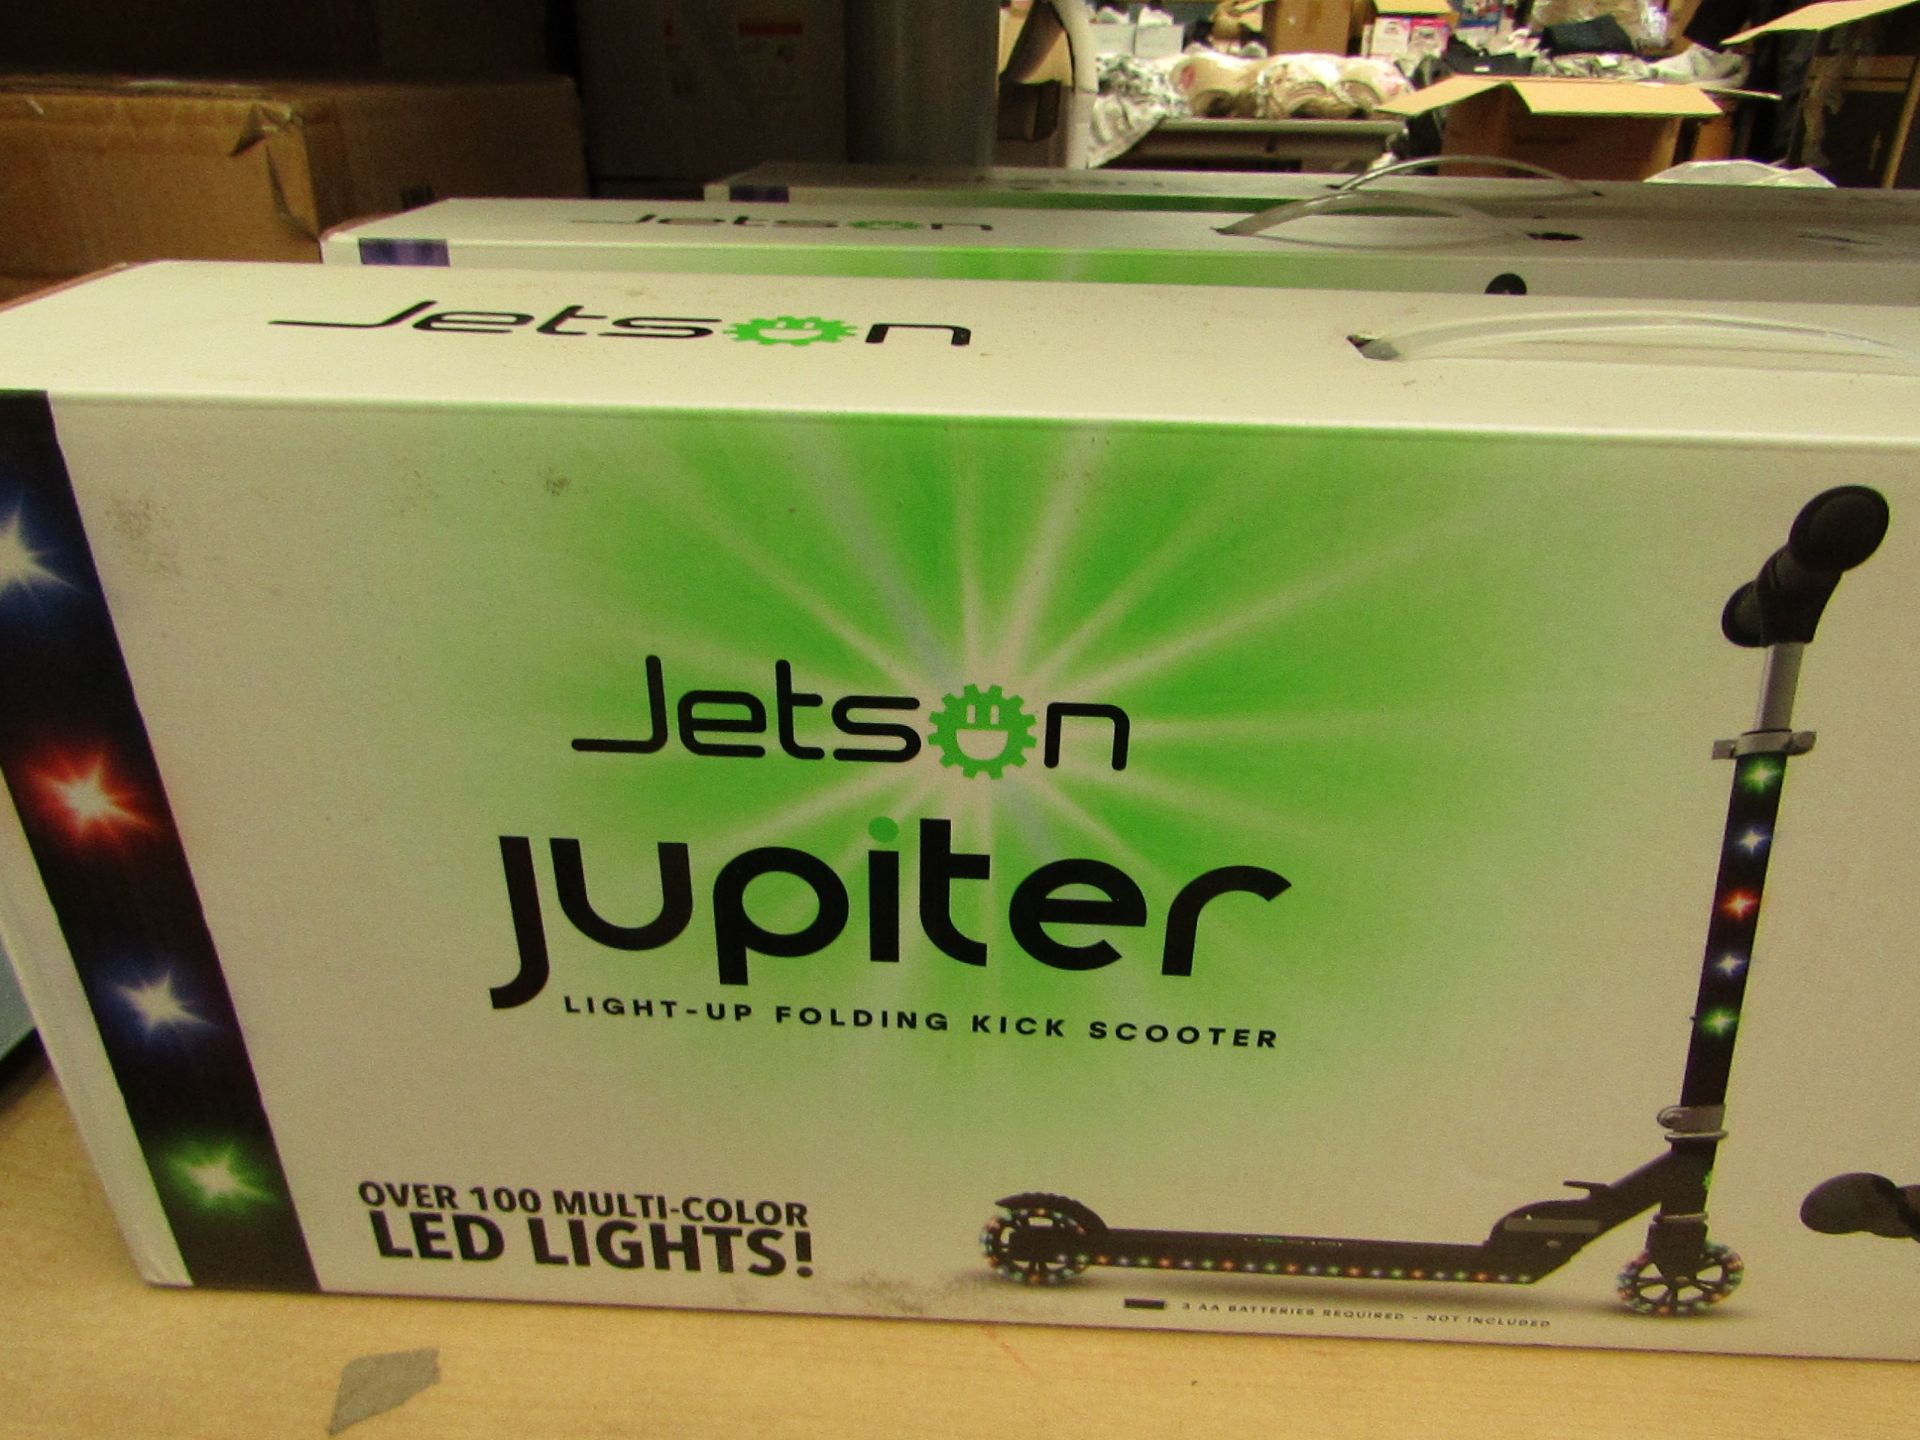 Jetson Jupiter Light Up Folding Kick Scooter boxed unchecked